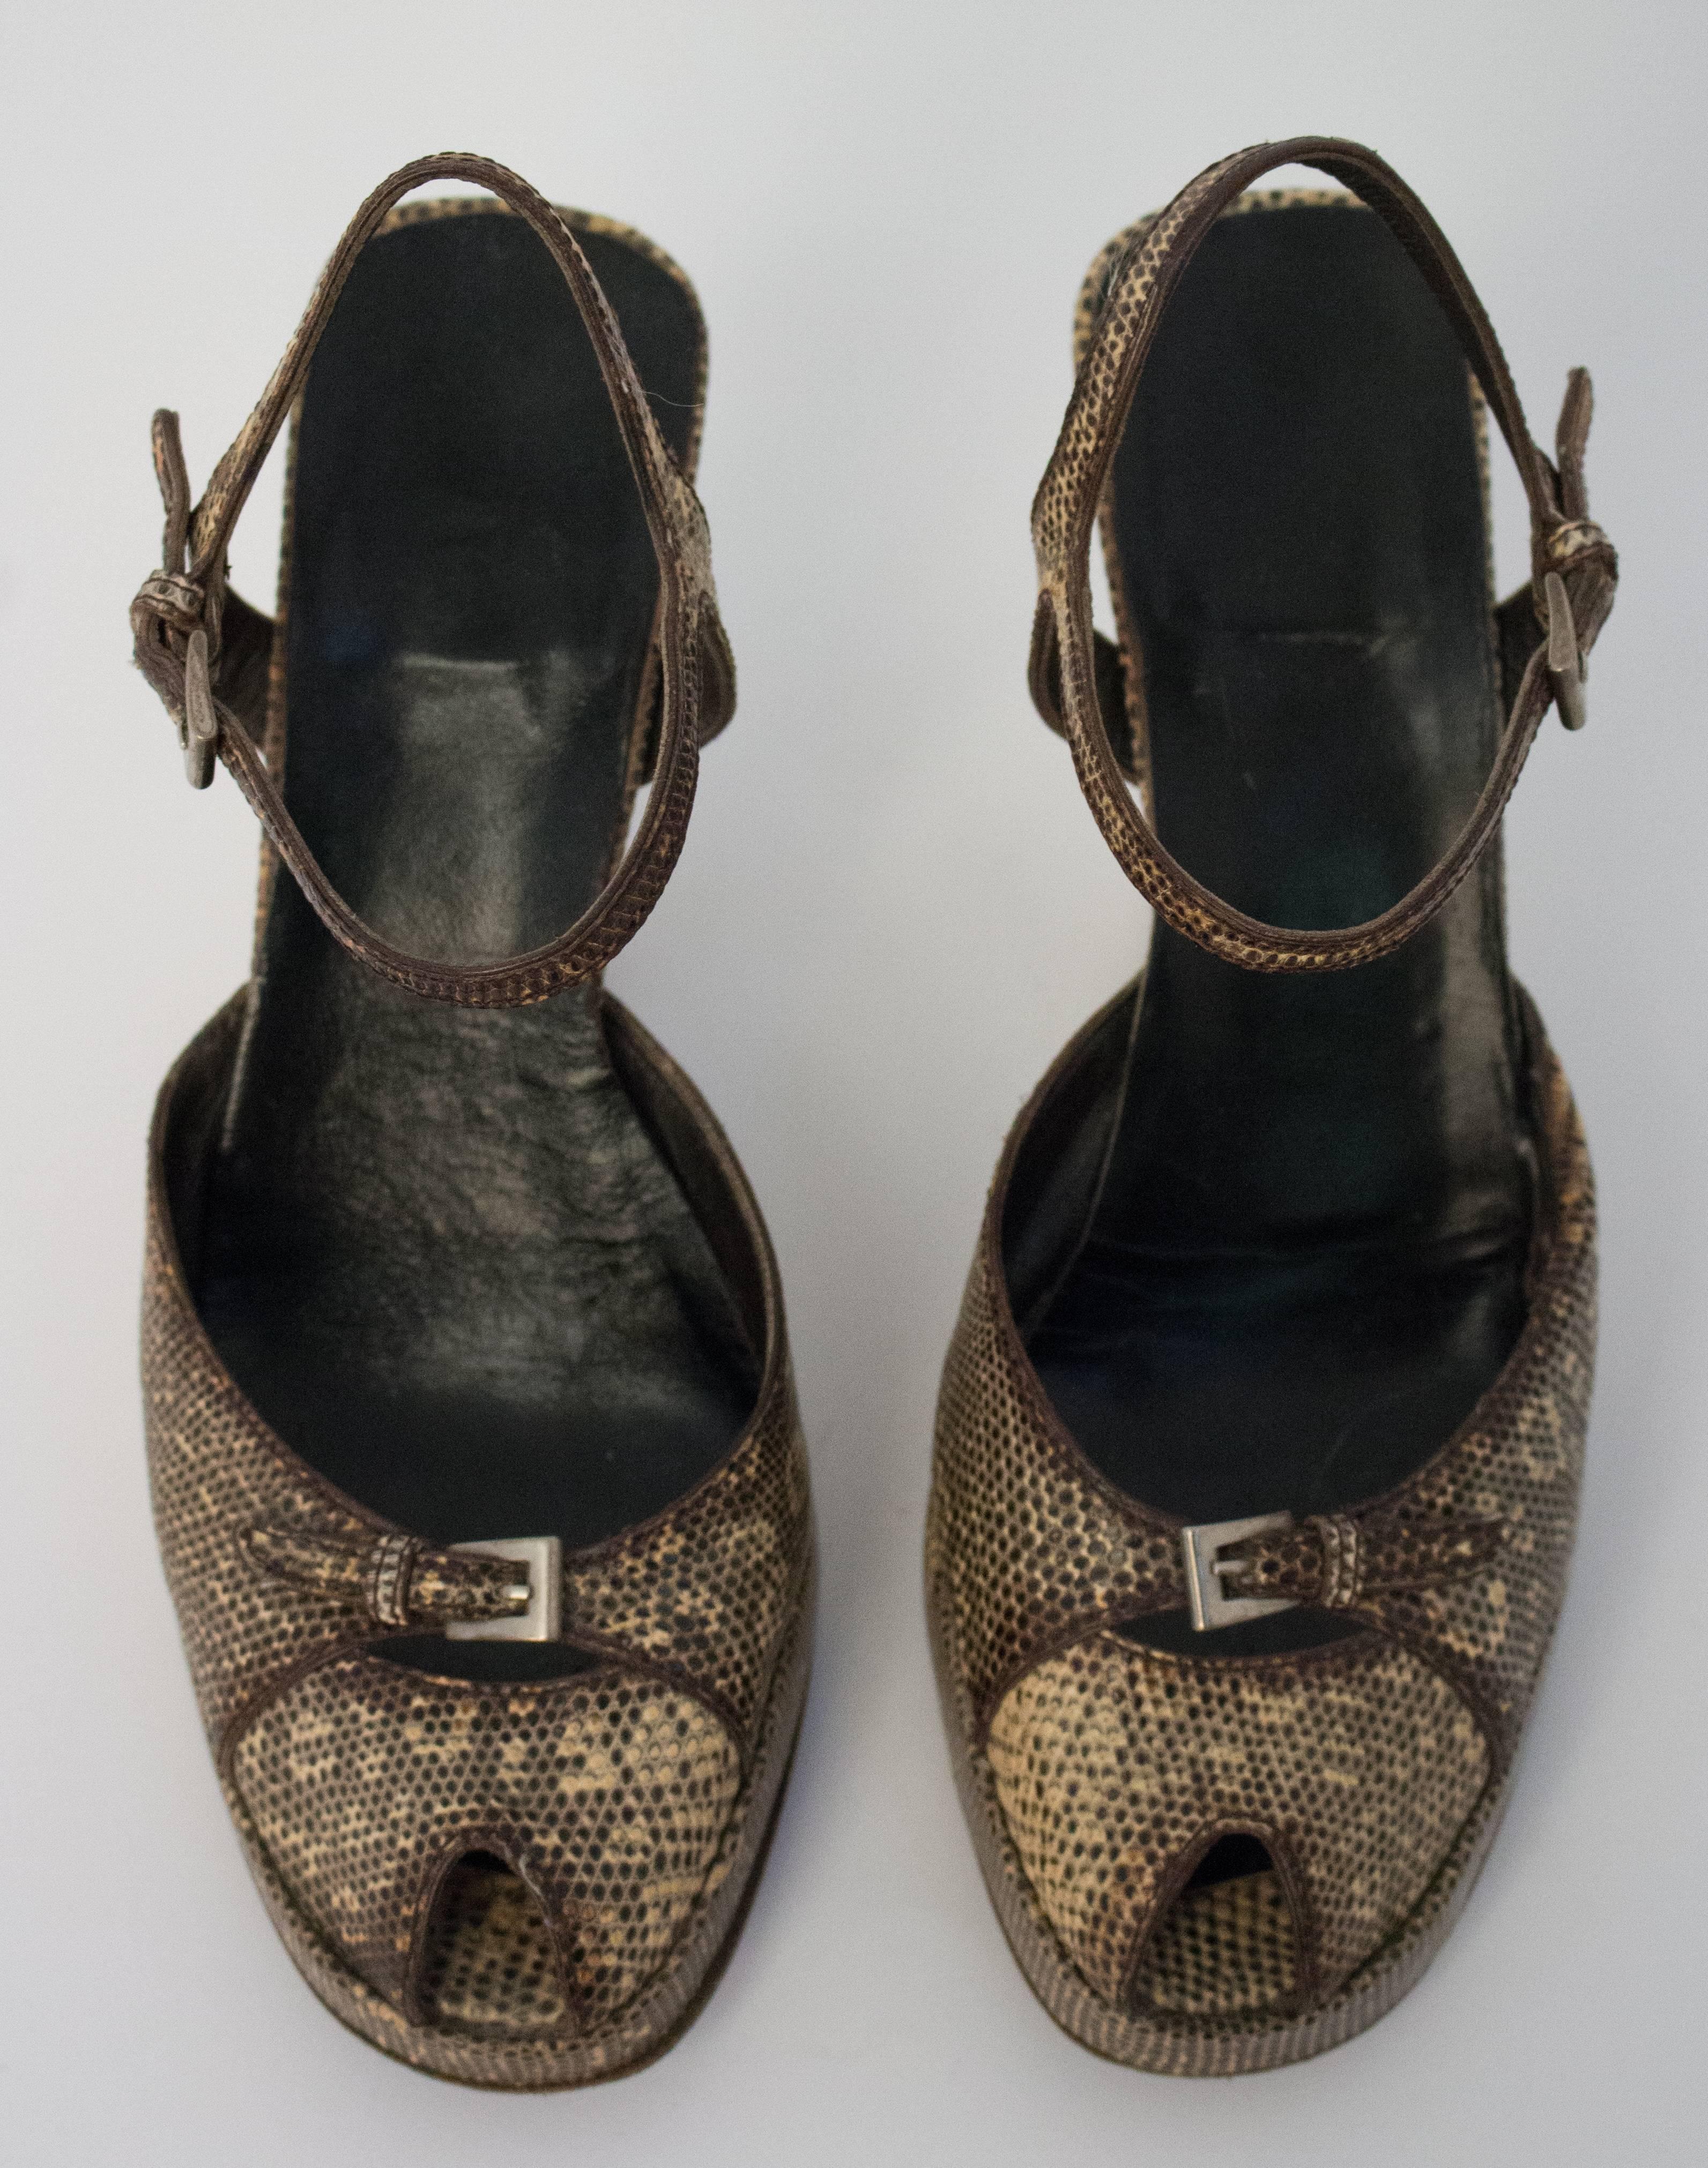 90s Prada Ringtail Lizard Platform Heels. Made in Italy, marked size 35.5. 